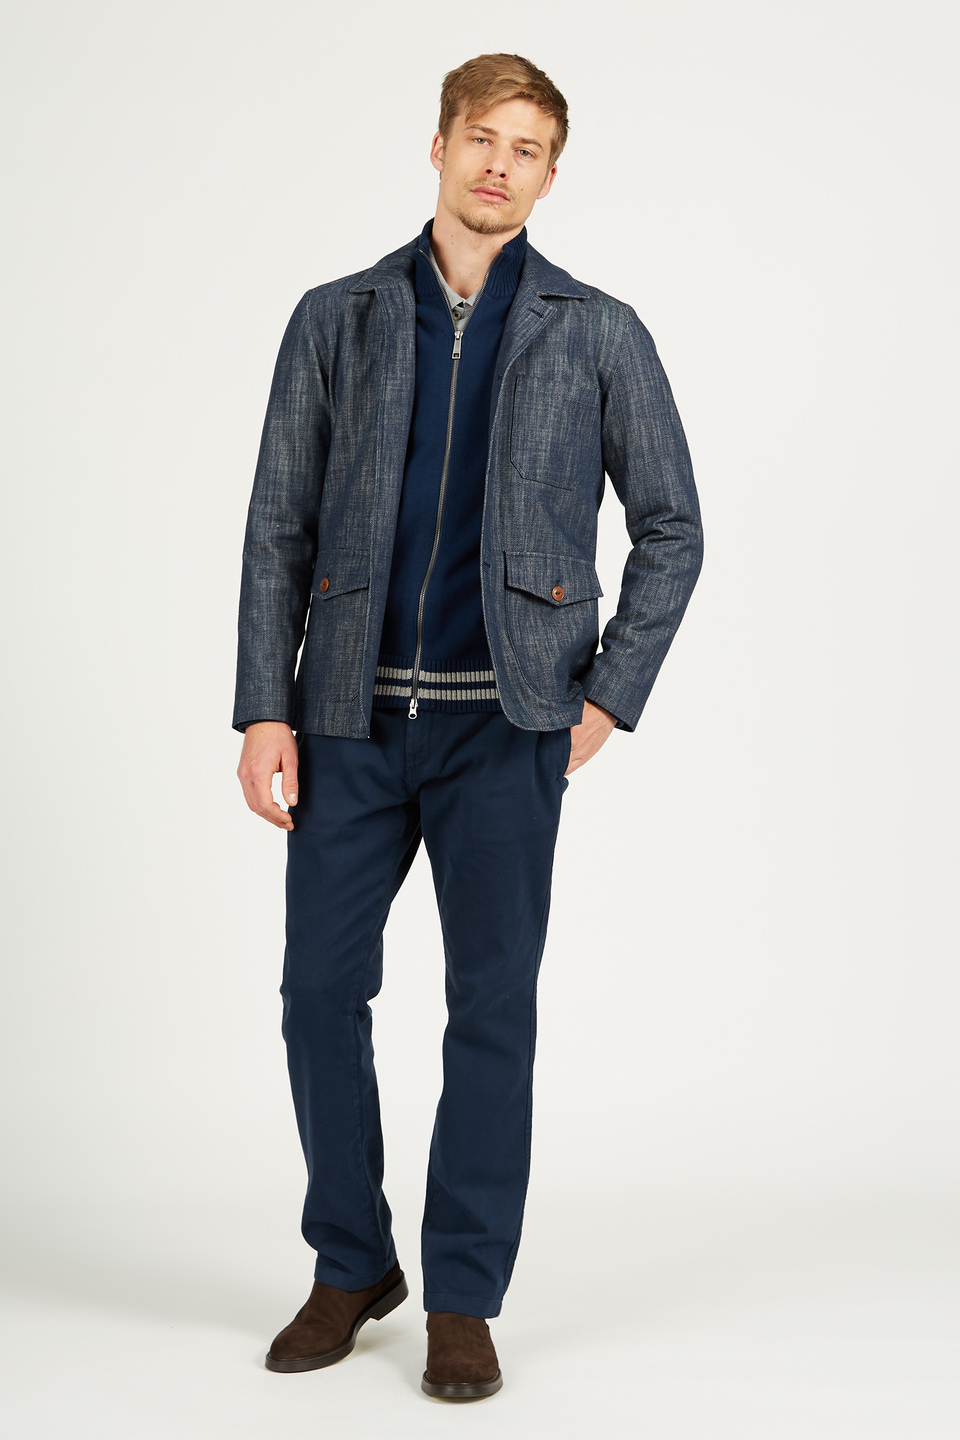 Men's Sahariana jacket in 100% cotton, regular fit model | La Martina - Official Online Shop